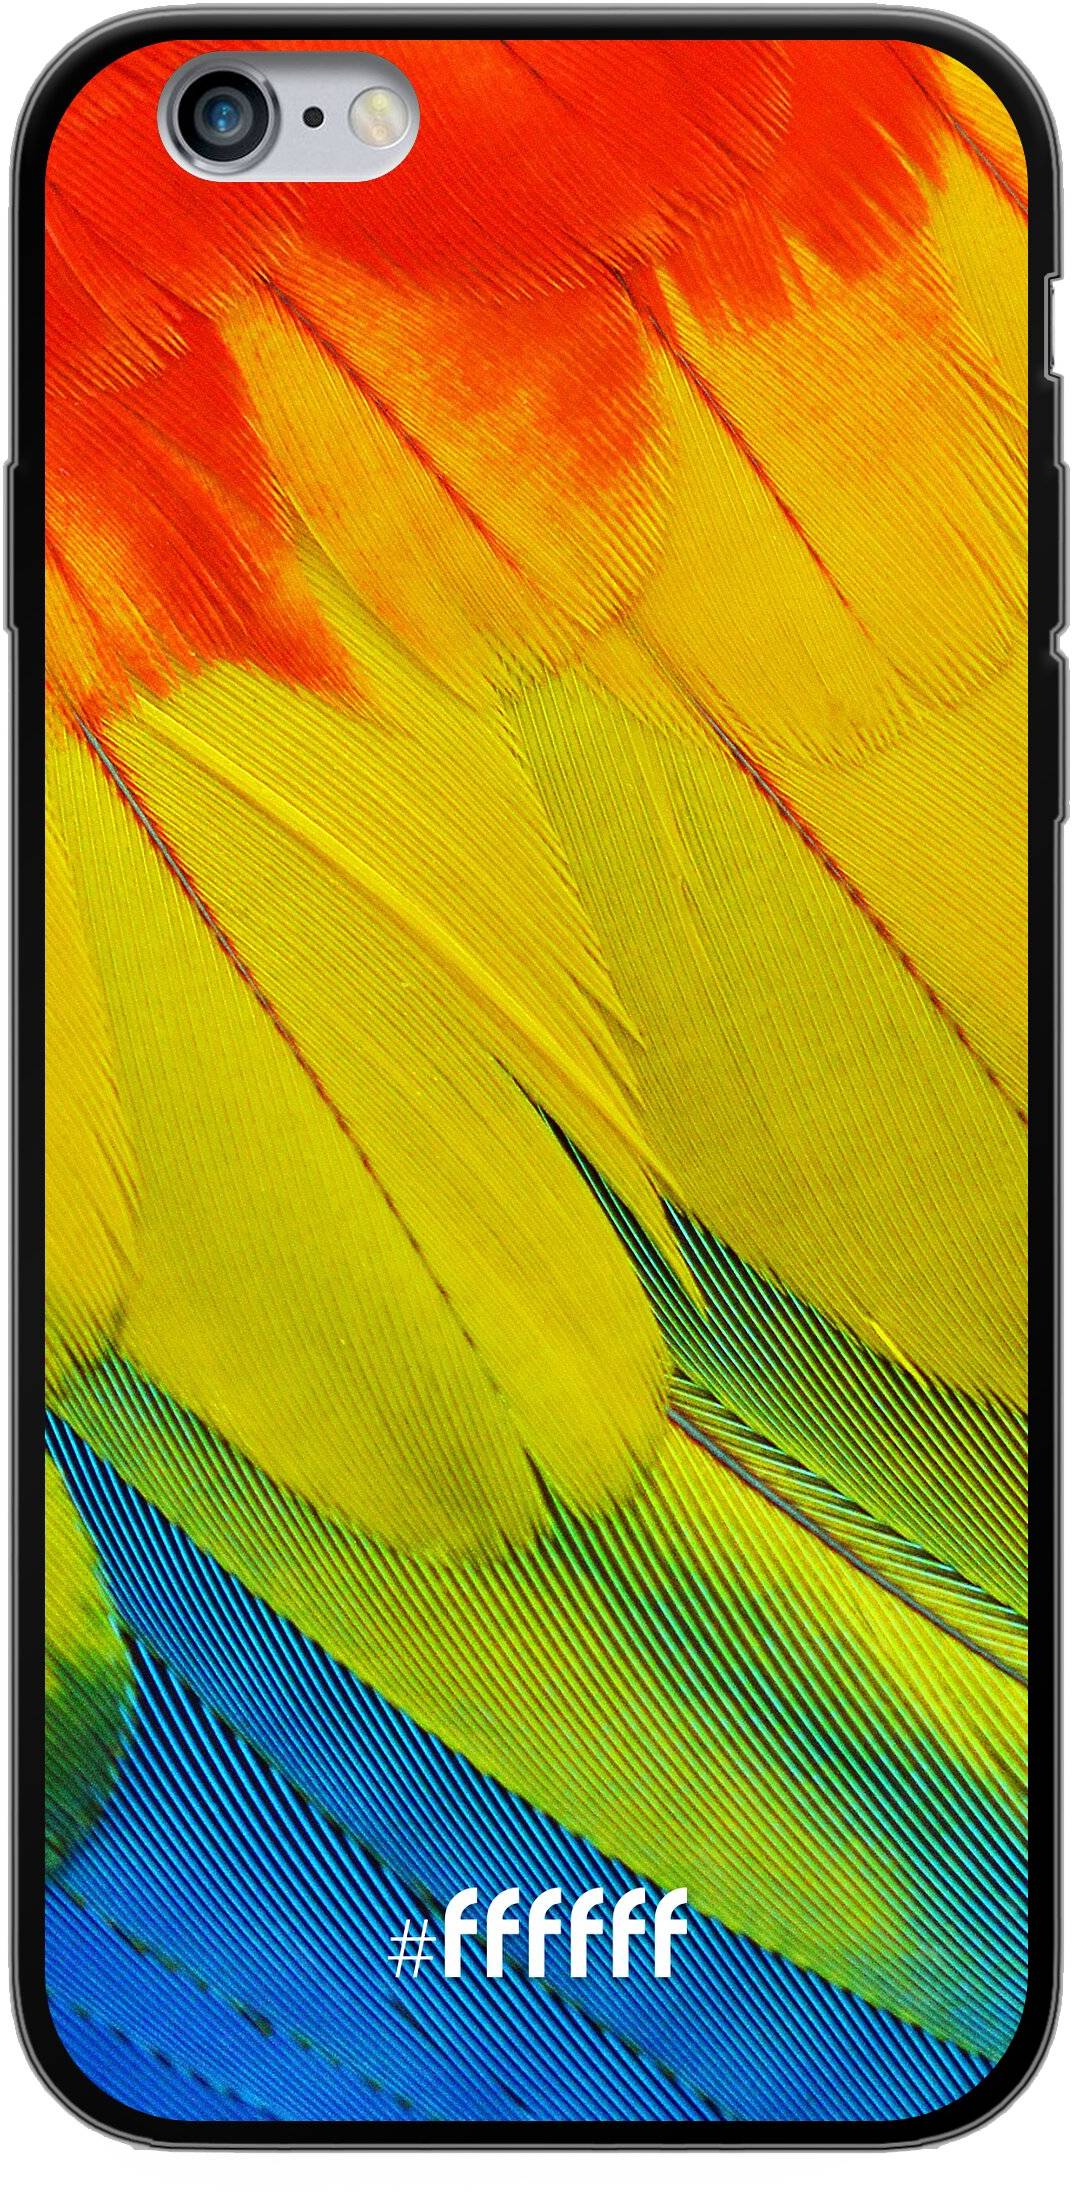 Macaw Hues iPhone 6s